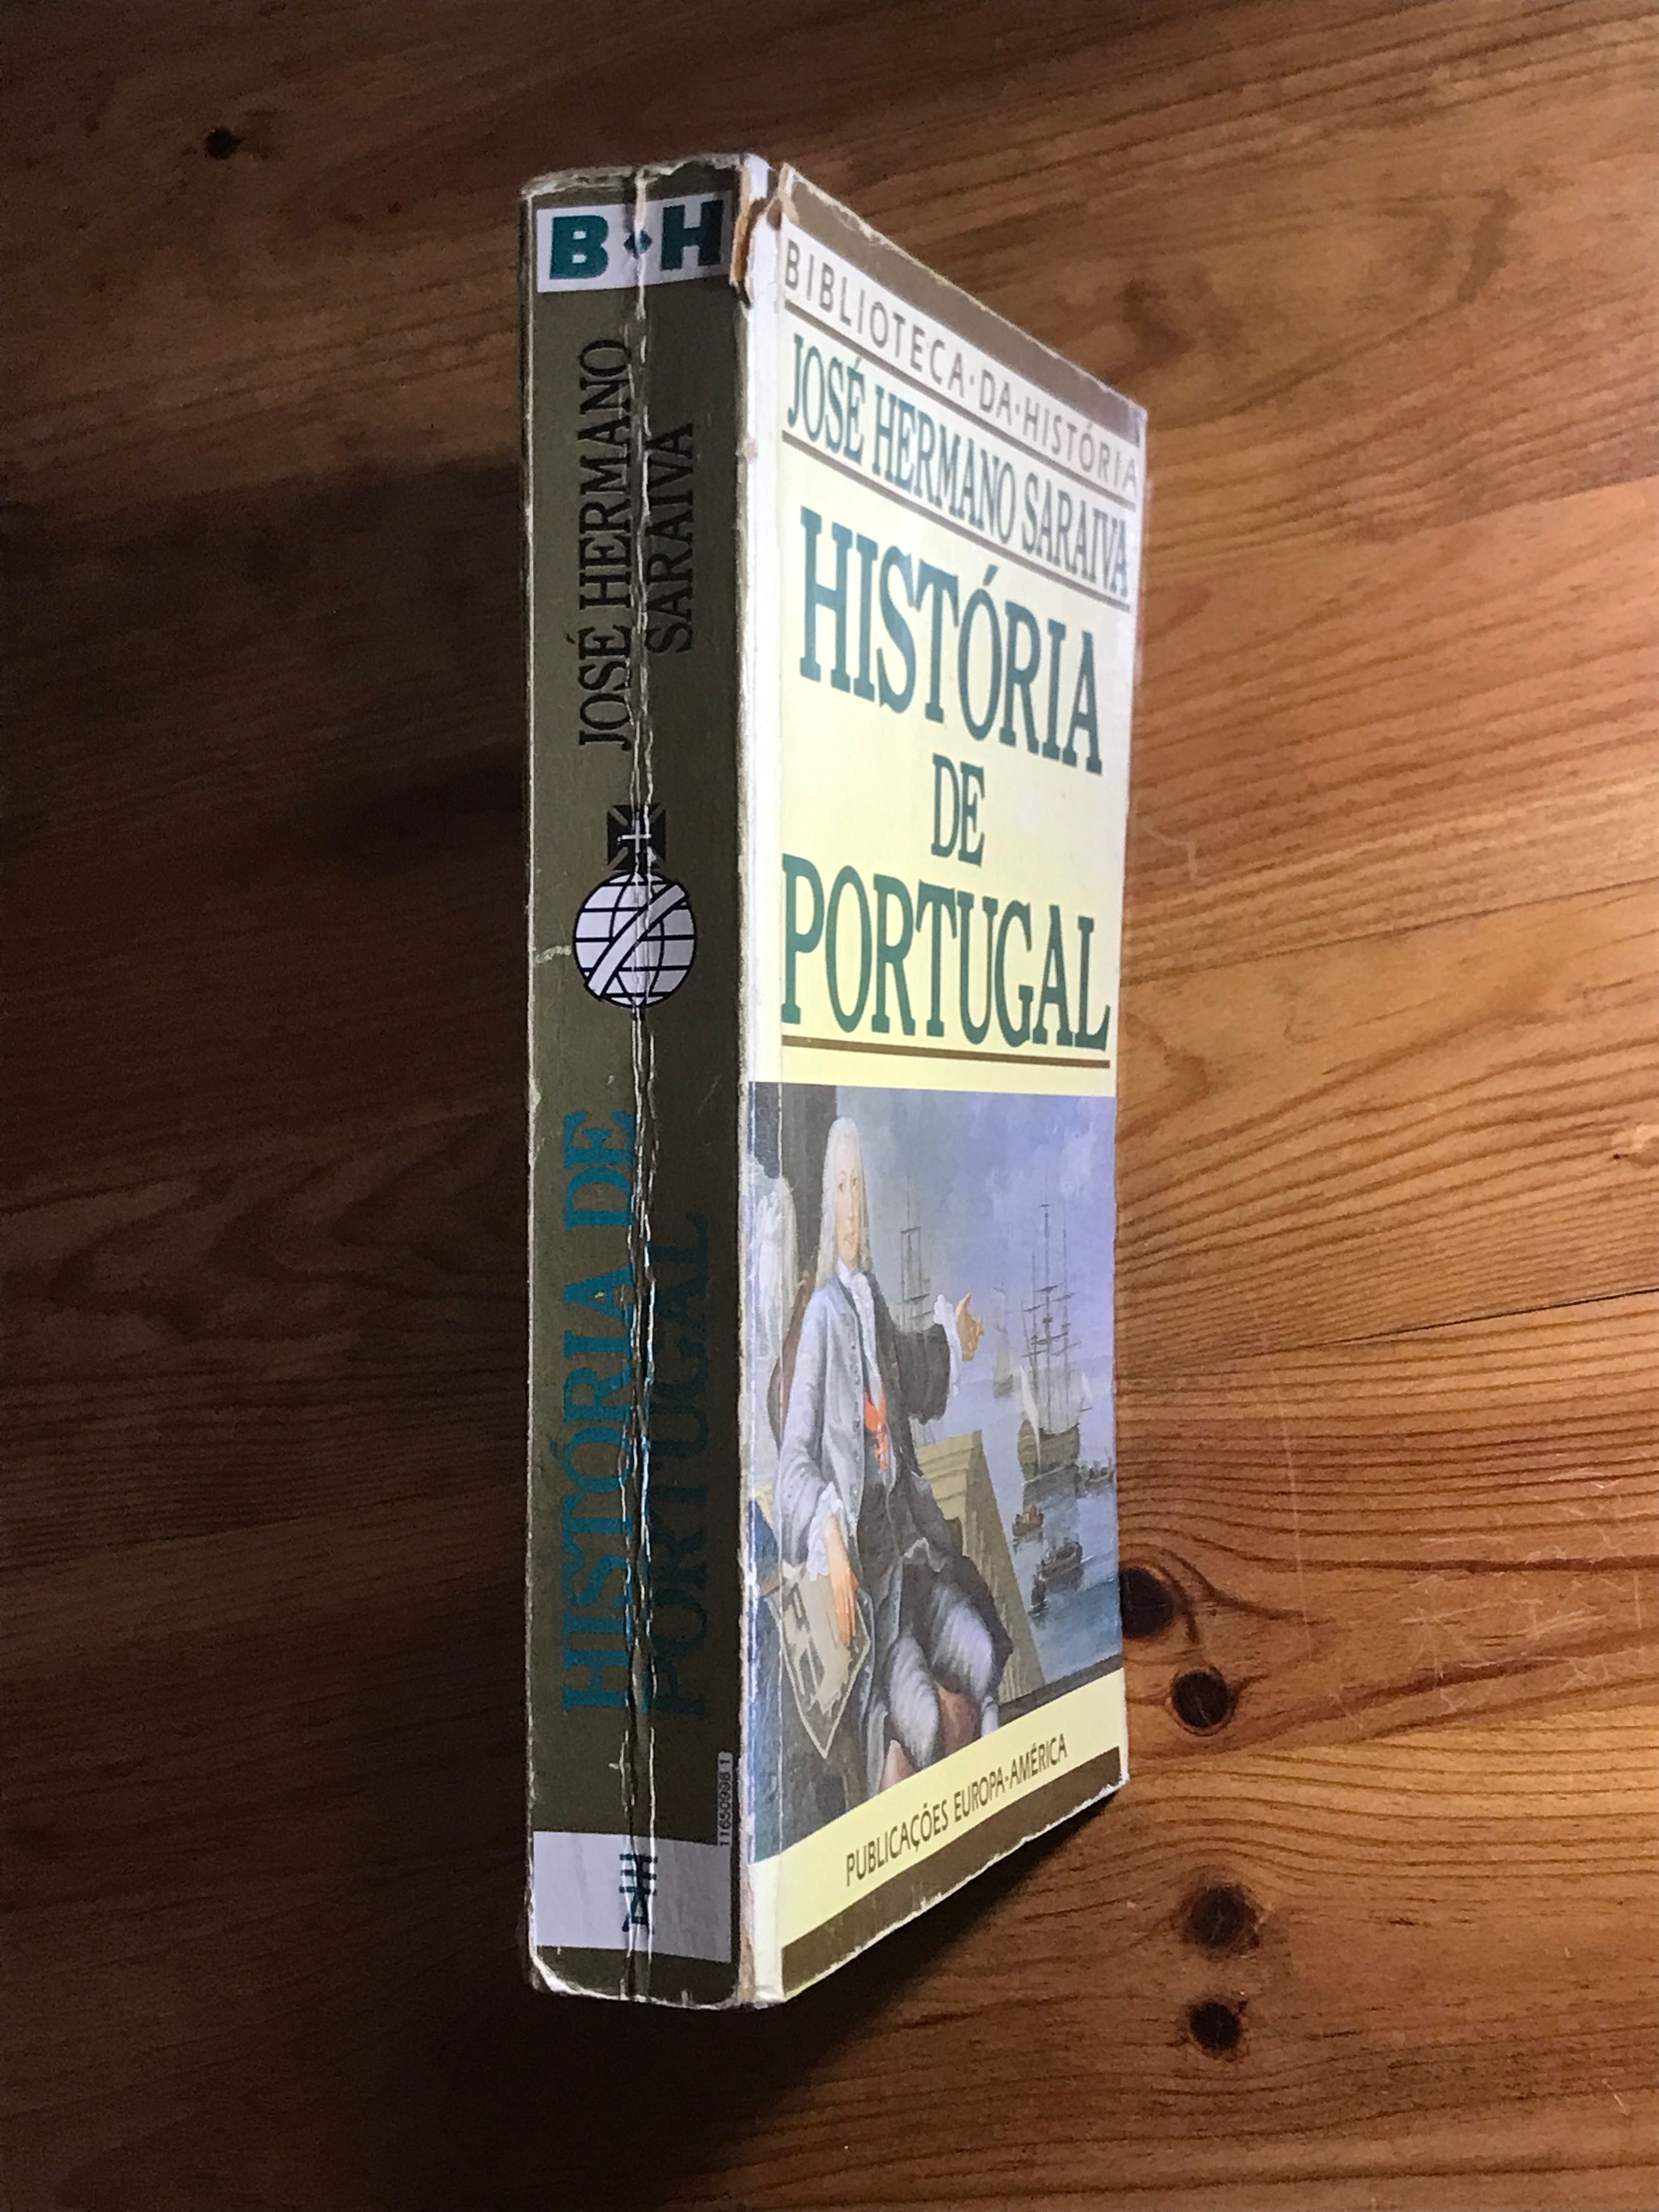 José Hermano Saraiva: História de Portugal